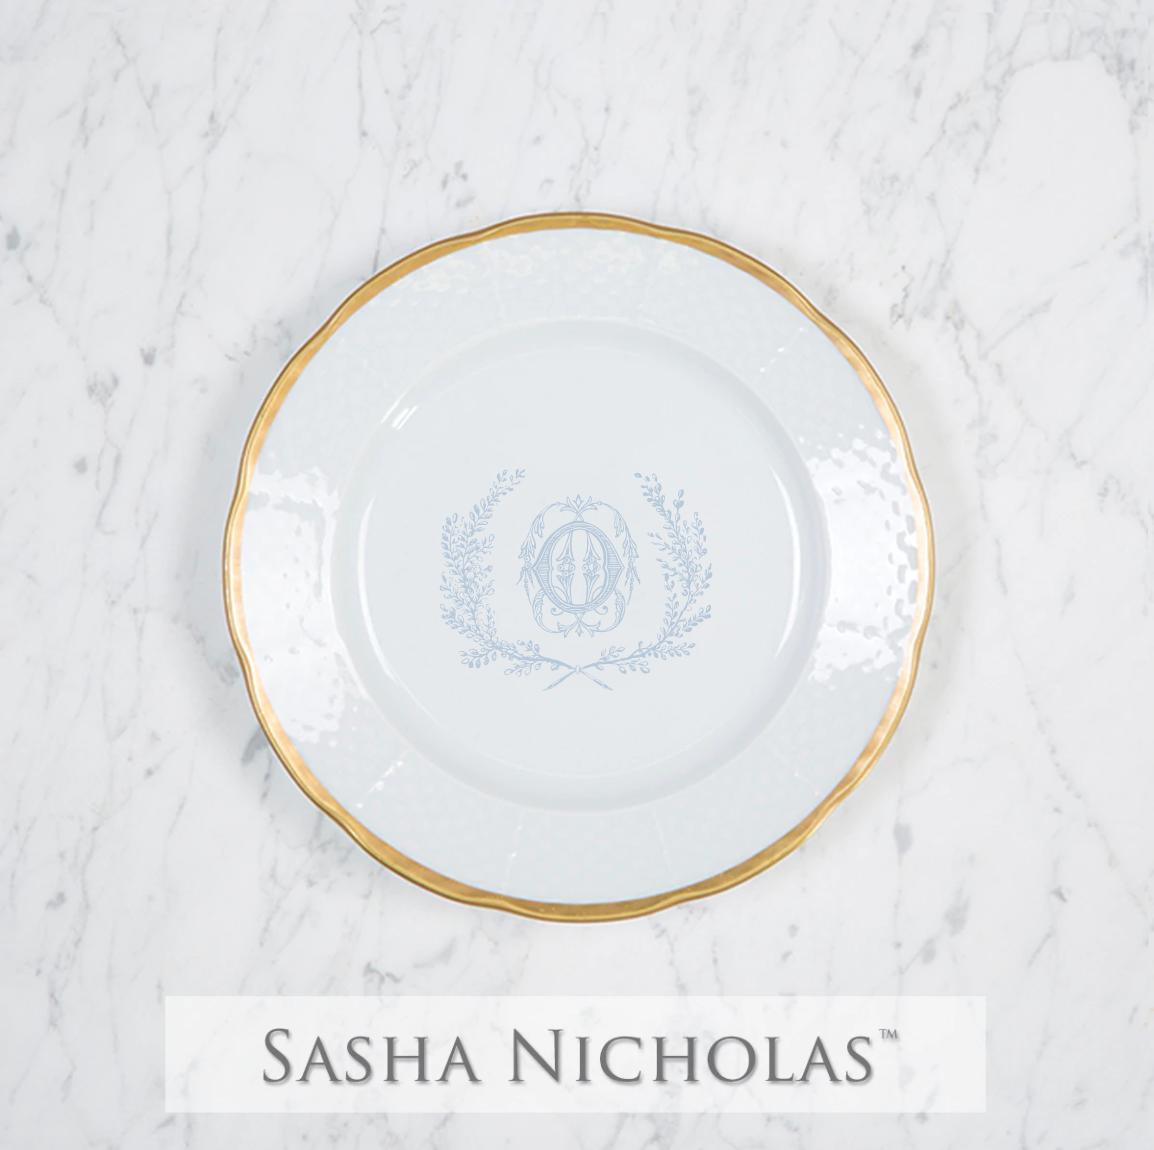 Deutschmann-o'leary Weave 24k Gold Salad Plate, Deutschmann-O'Leary SNWG111, Sasha Nicholas